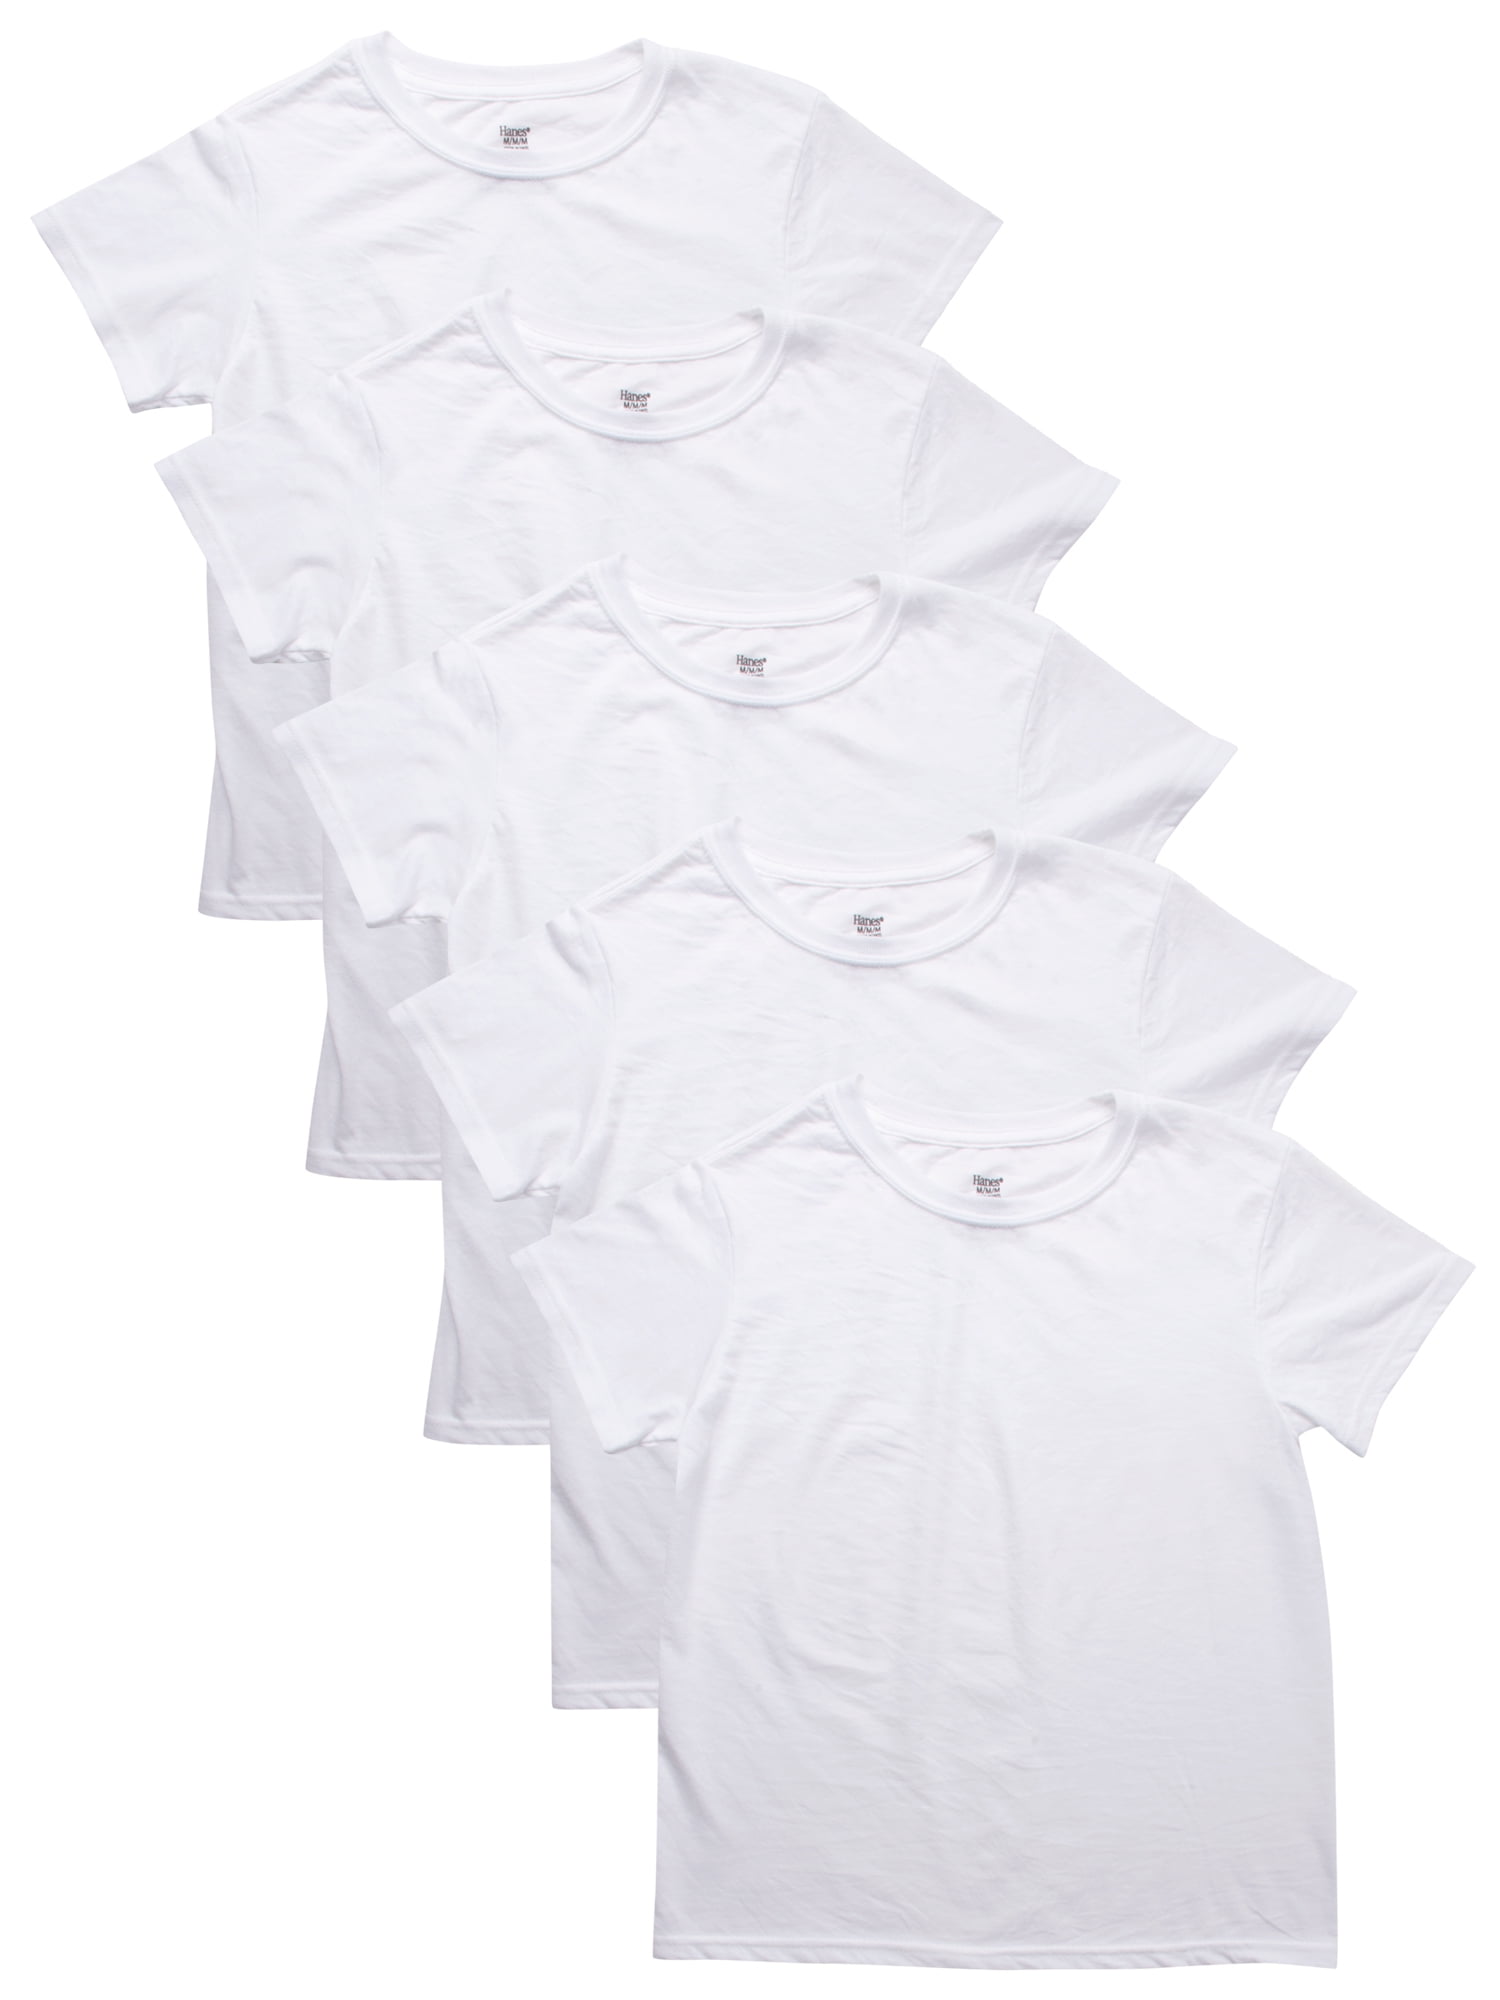 XL Got Tennis Kids Tee Shirt Pick Size & Color 2T 